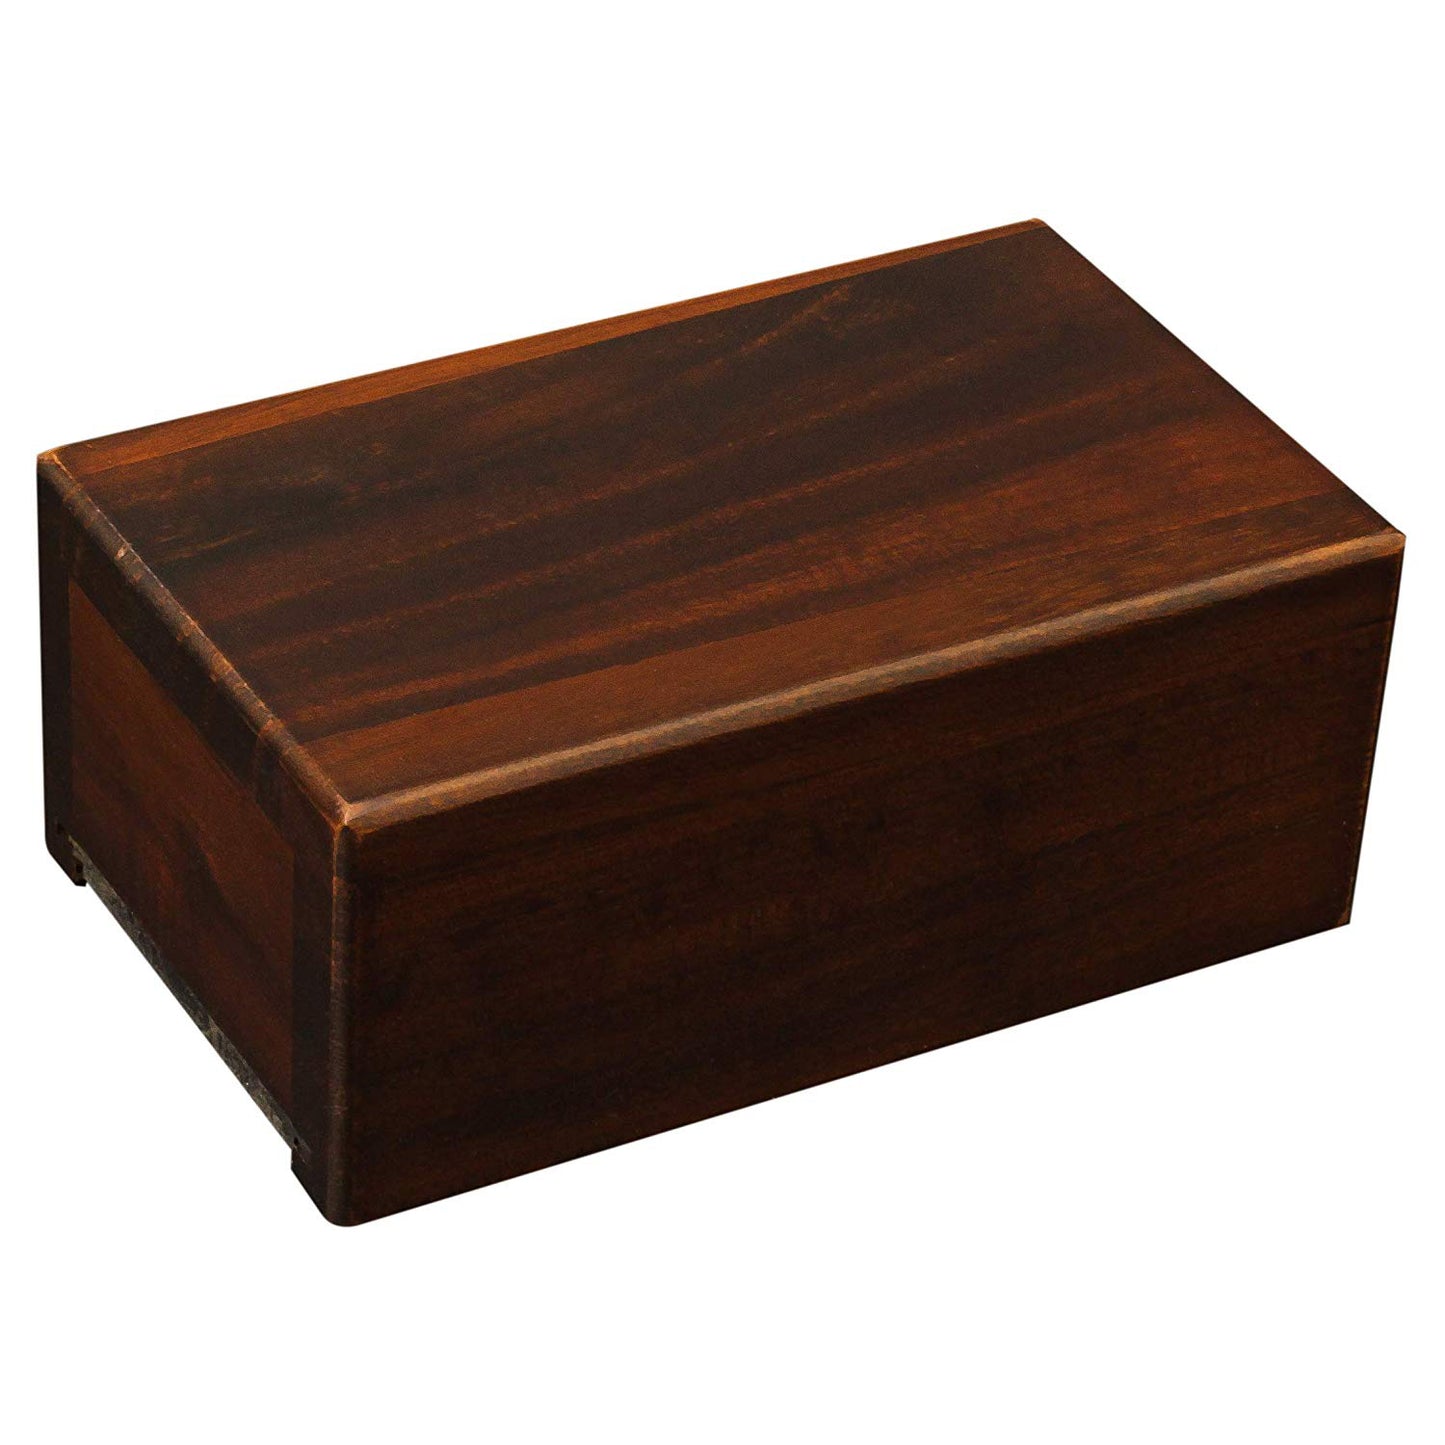 Economy Wooden Urn Box - Extra Small